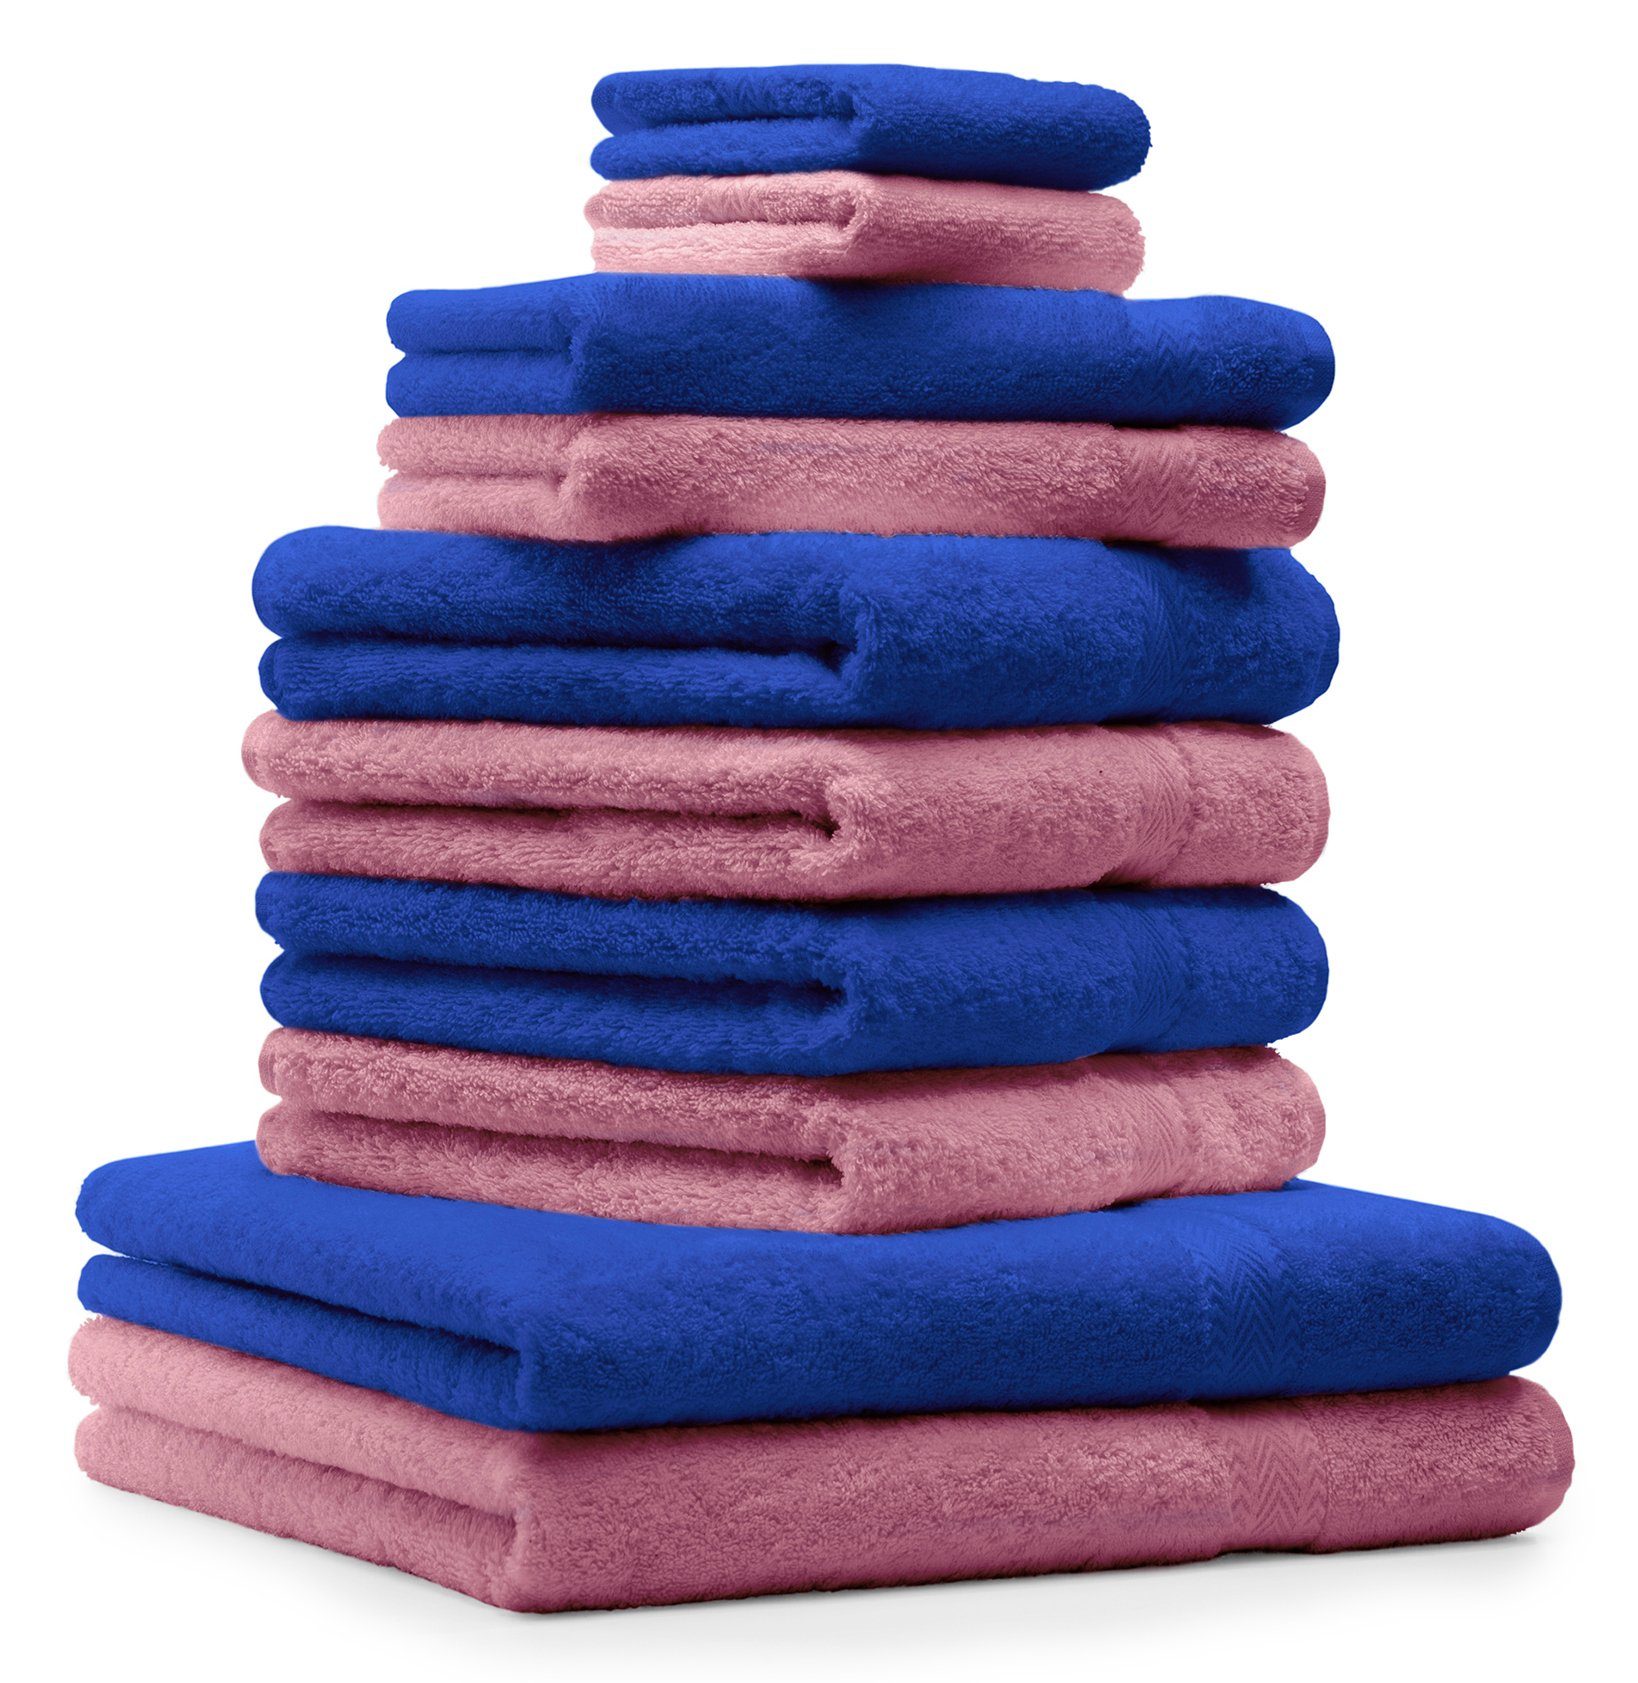 Betz Handtuch Set 10-TLG. Handtuch-Set Premium 100% Baumwolle 2 Duschtücher 4 Handtücher 2 Gästetücher 2 Waschhandschuhe Farbe Royal Blau & Altrosa, 100% Baumwolle, (10-tlg)